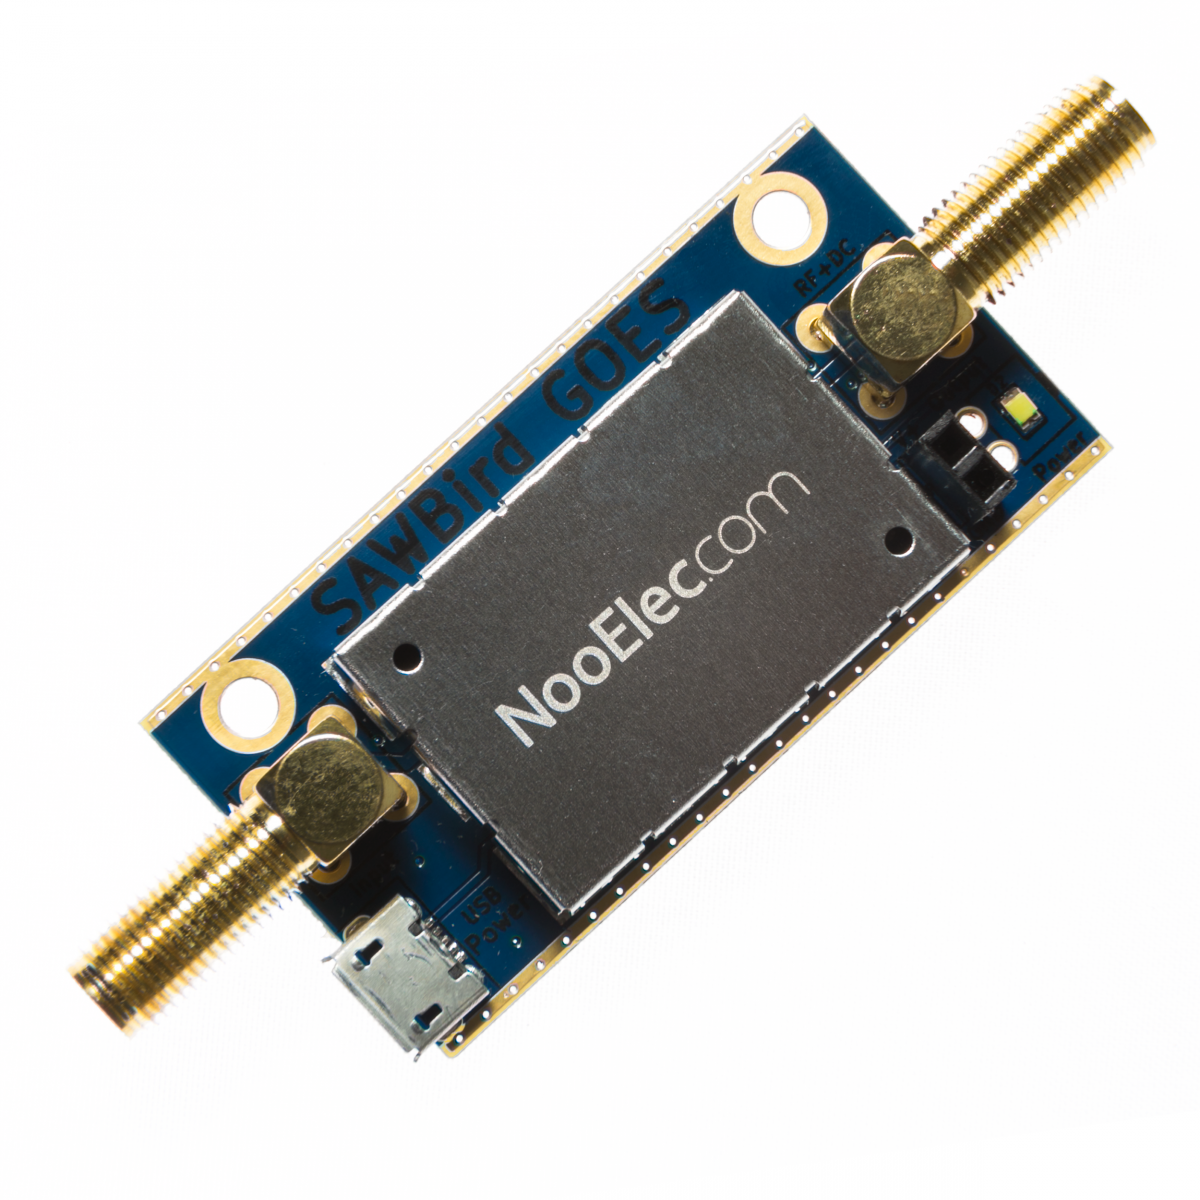 Nooelec SAWbird GOES Barebones - Premium Dual Ultra-Low Noise Amplifier  (LNA) & SAW Filter Module for NOAA (GOES/LRIT/HRIT/HPRT) Applications.  1688MHz